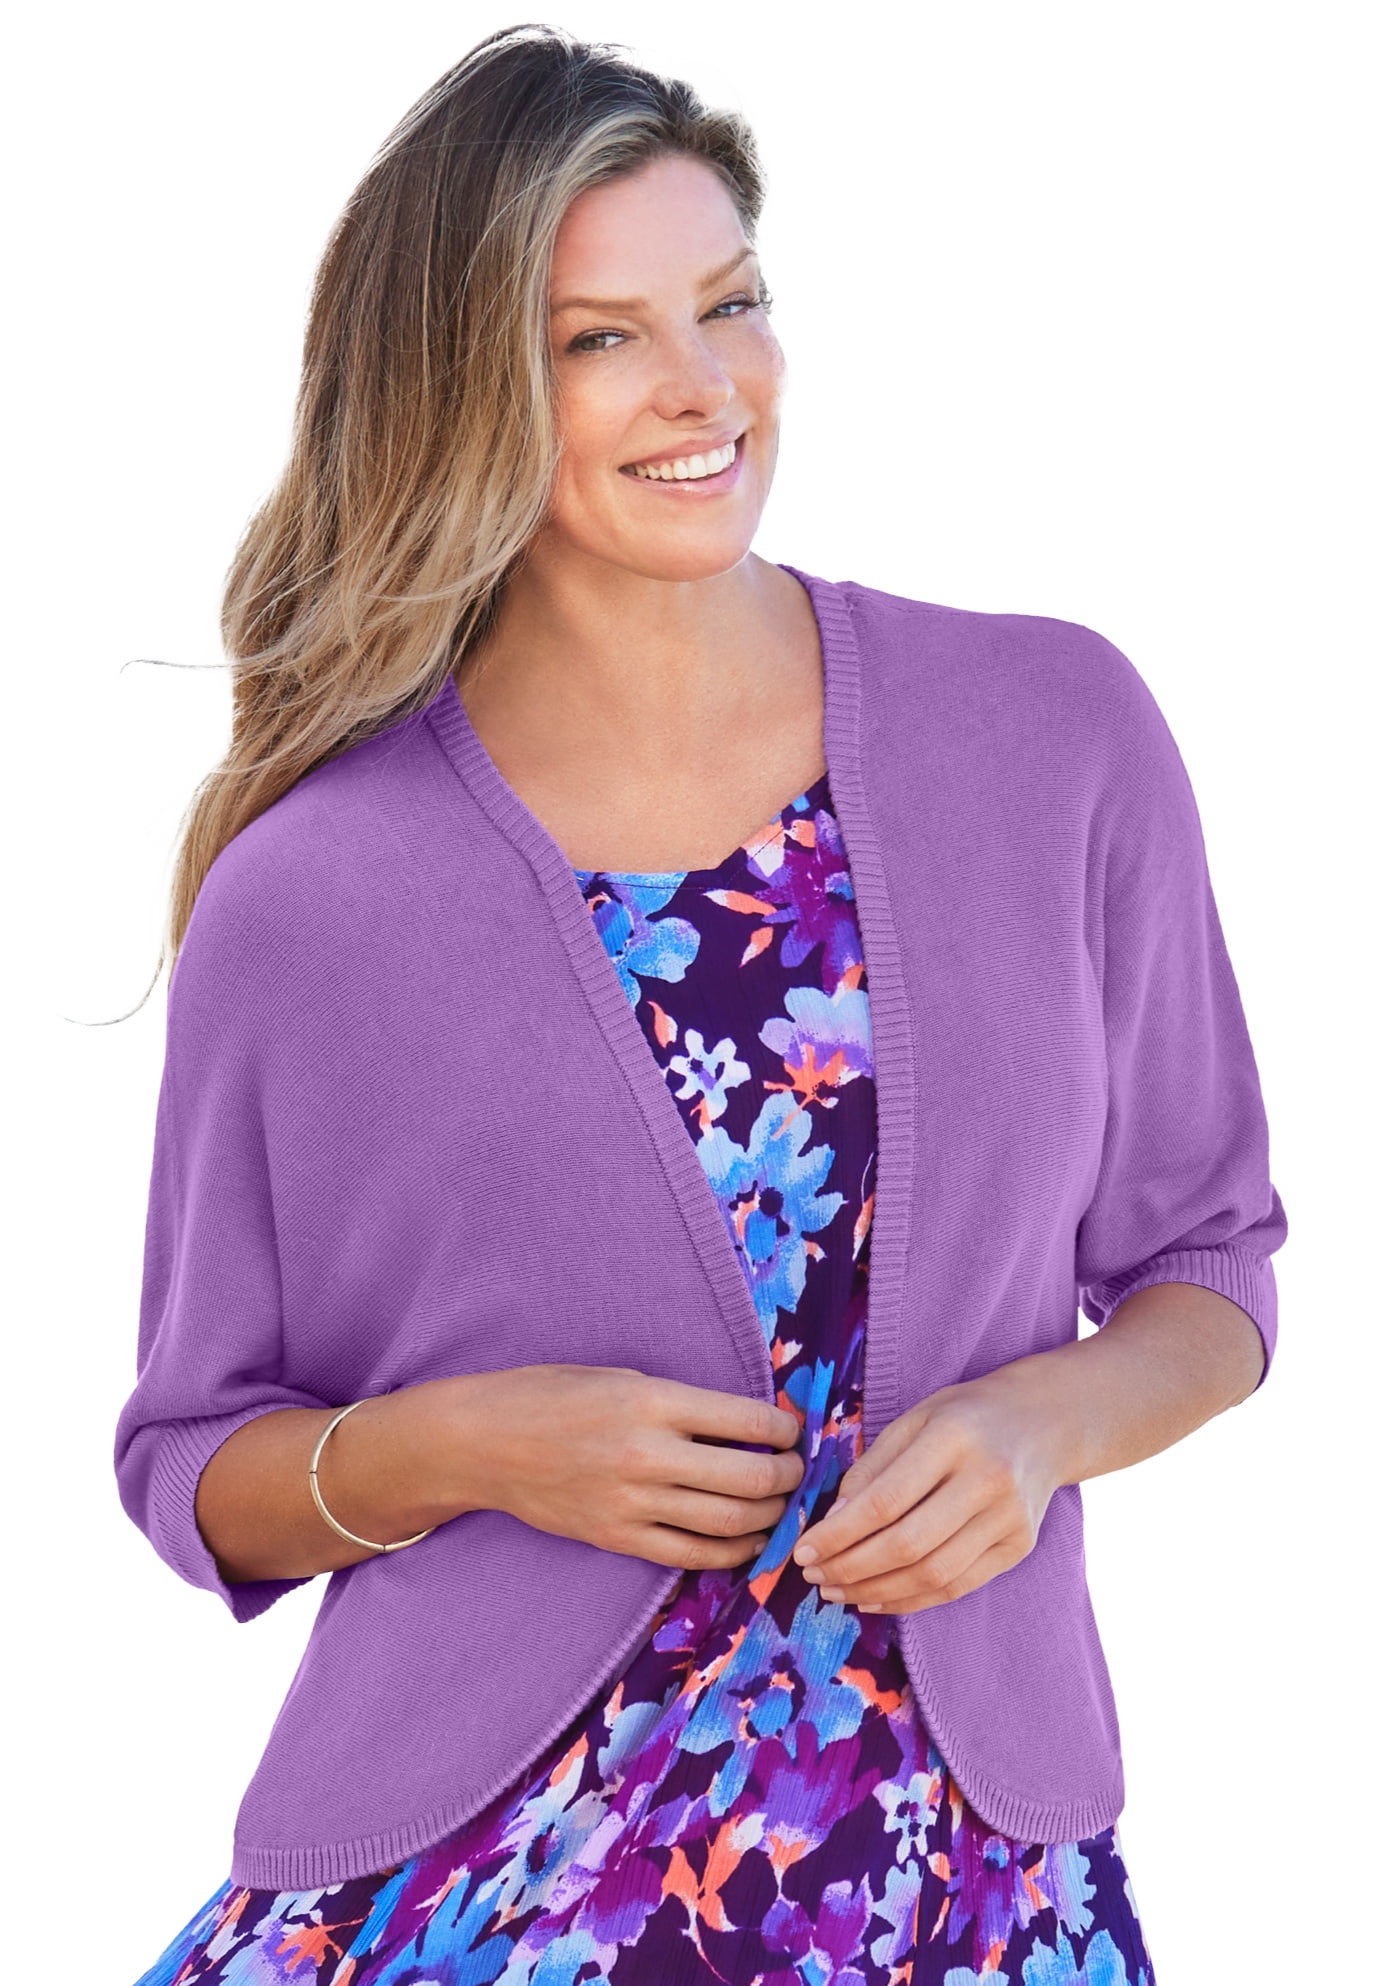 Woman Within Women's Plus Size Rib Trim Cardigan Shrug Sweater - Walmart.com